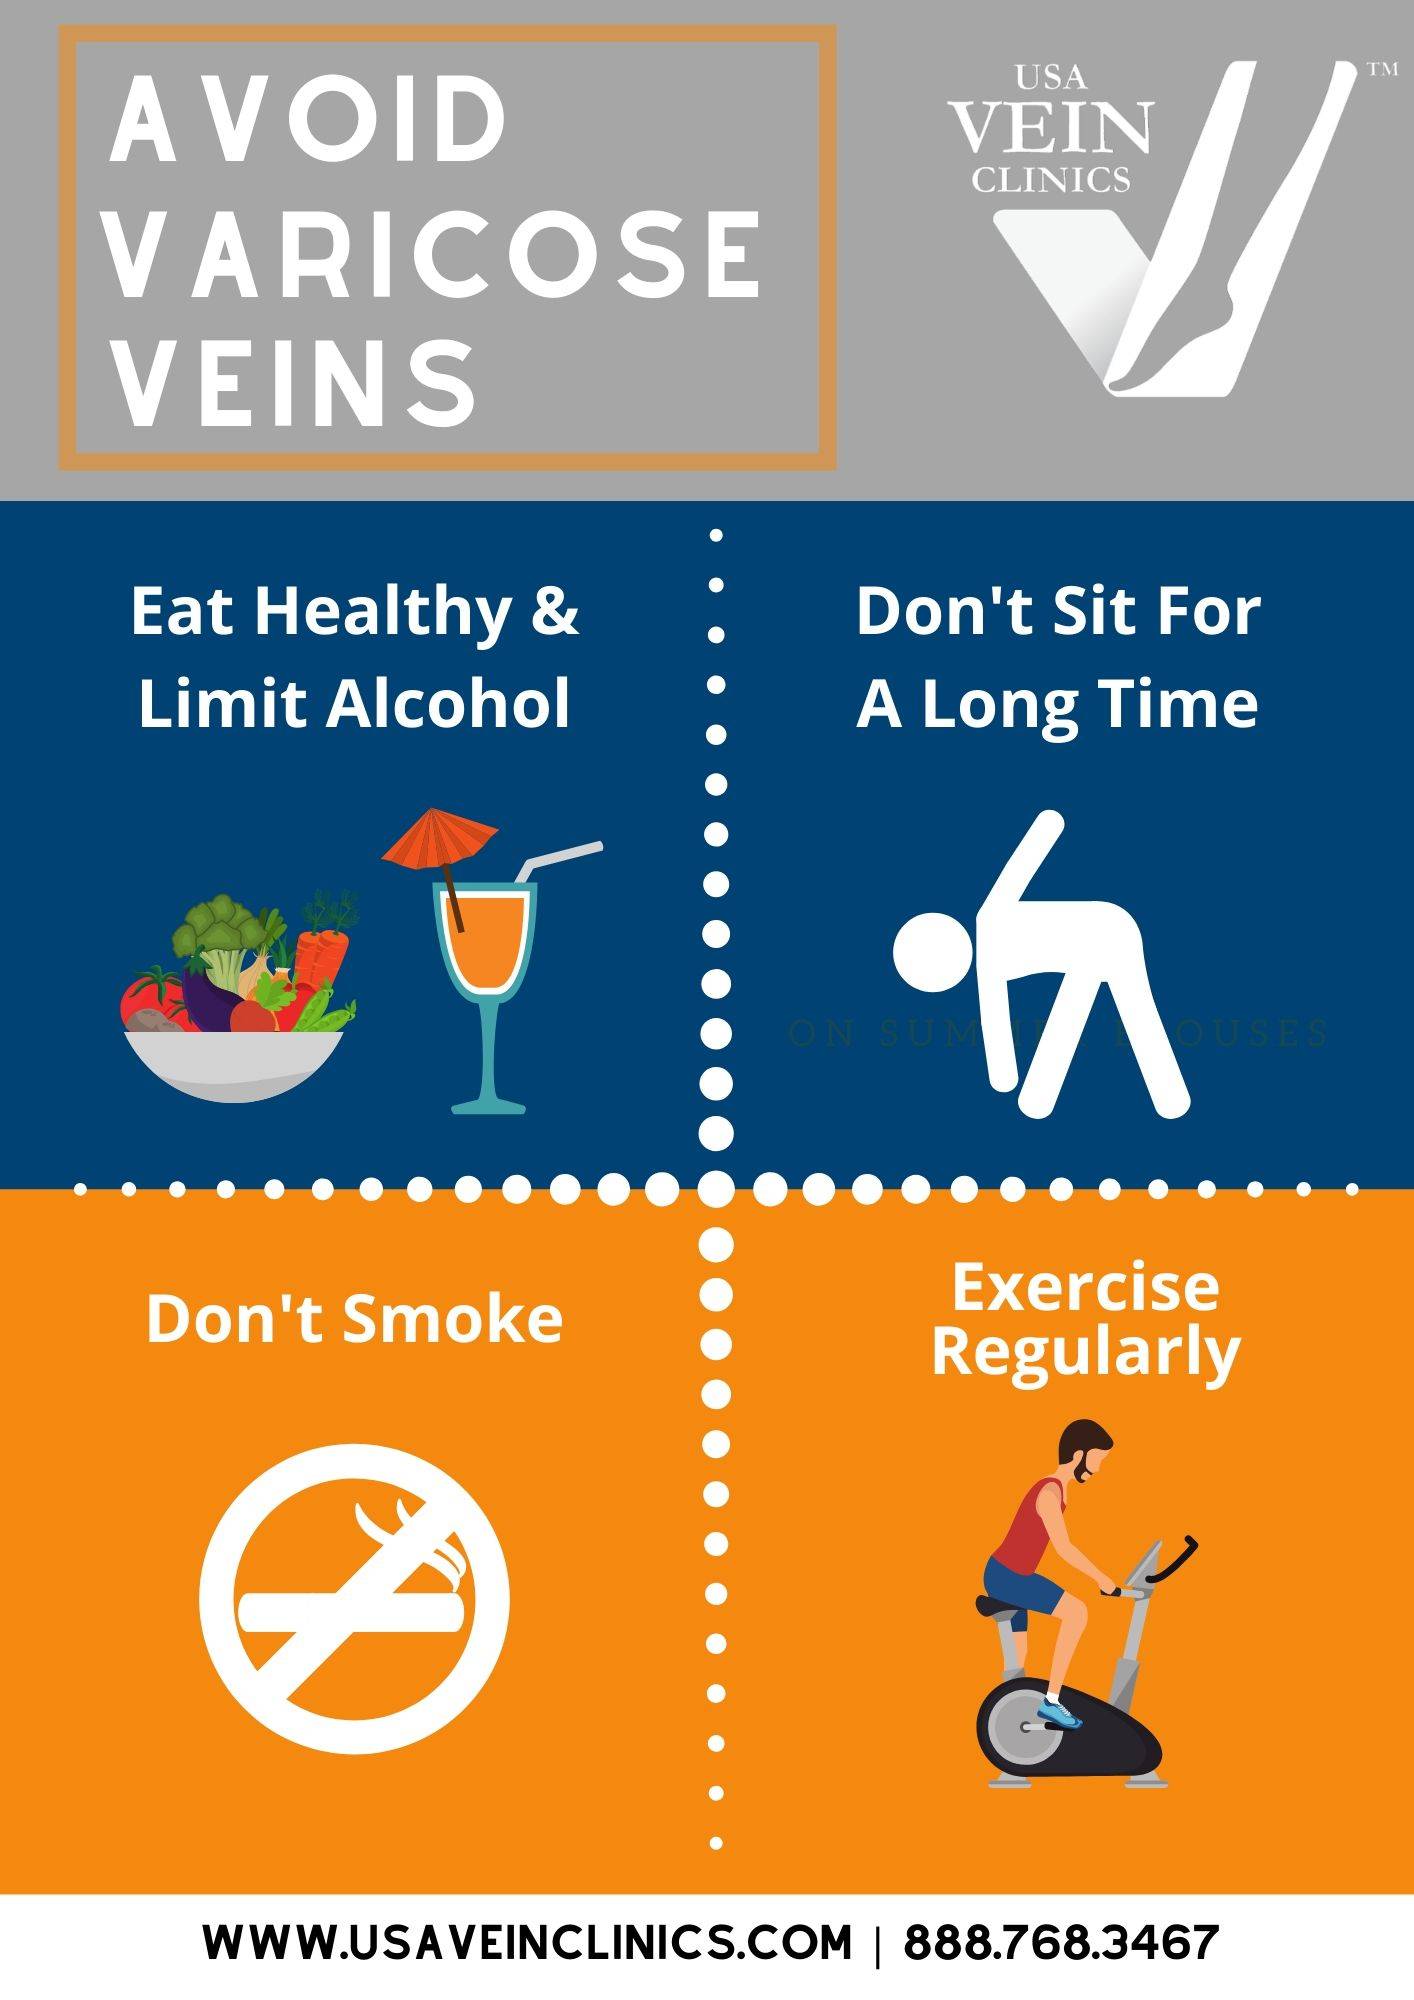 3 Ways to Prevent Varicose Veins - wikiHow Health